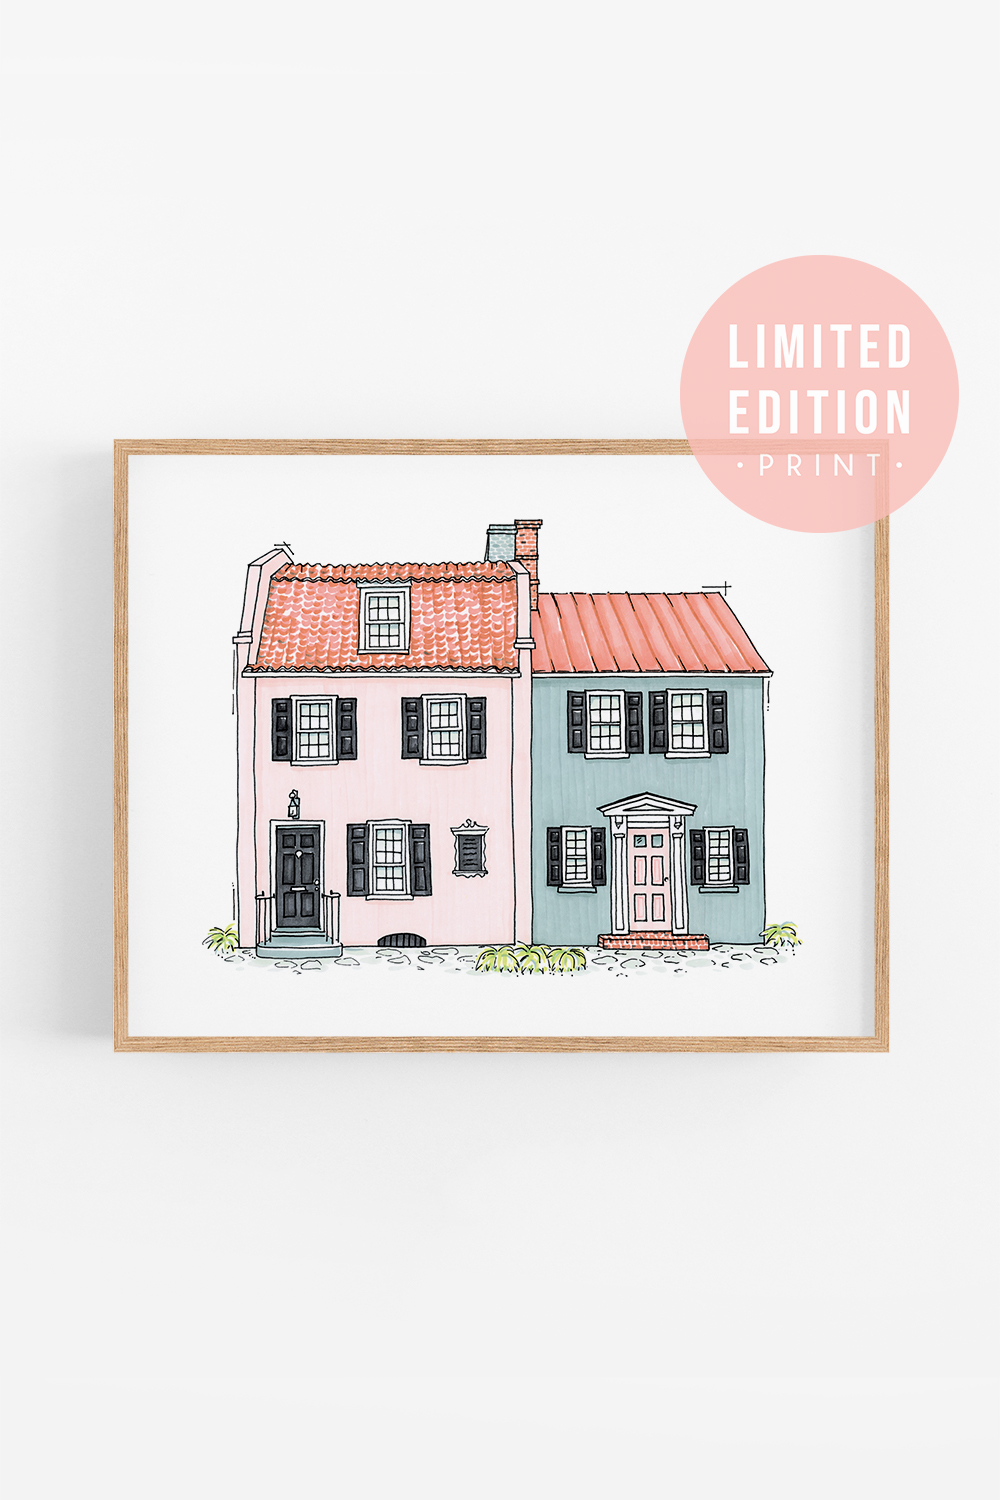 Architectural Art Print: Pink &amp; Blue House [LIMITED EDITION]; Charleston Artwork; Girls room artwork; Whimsical Illustration